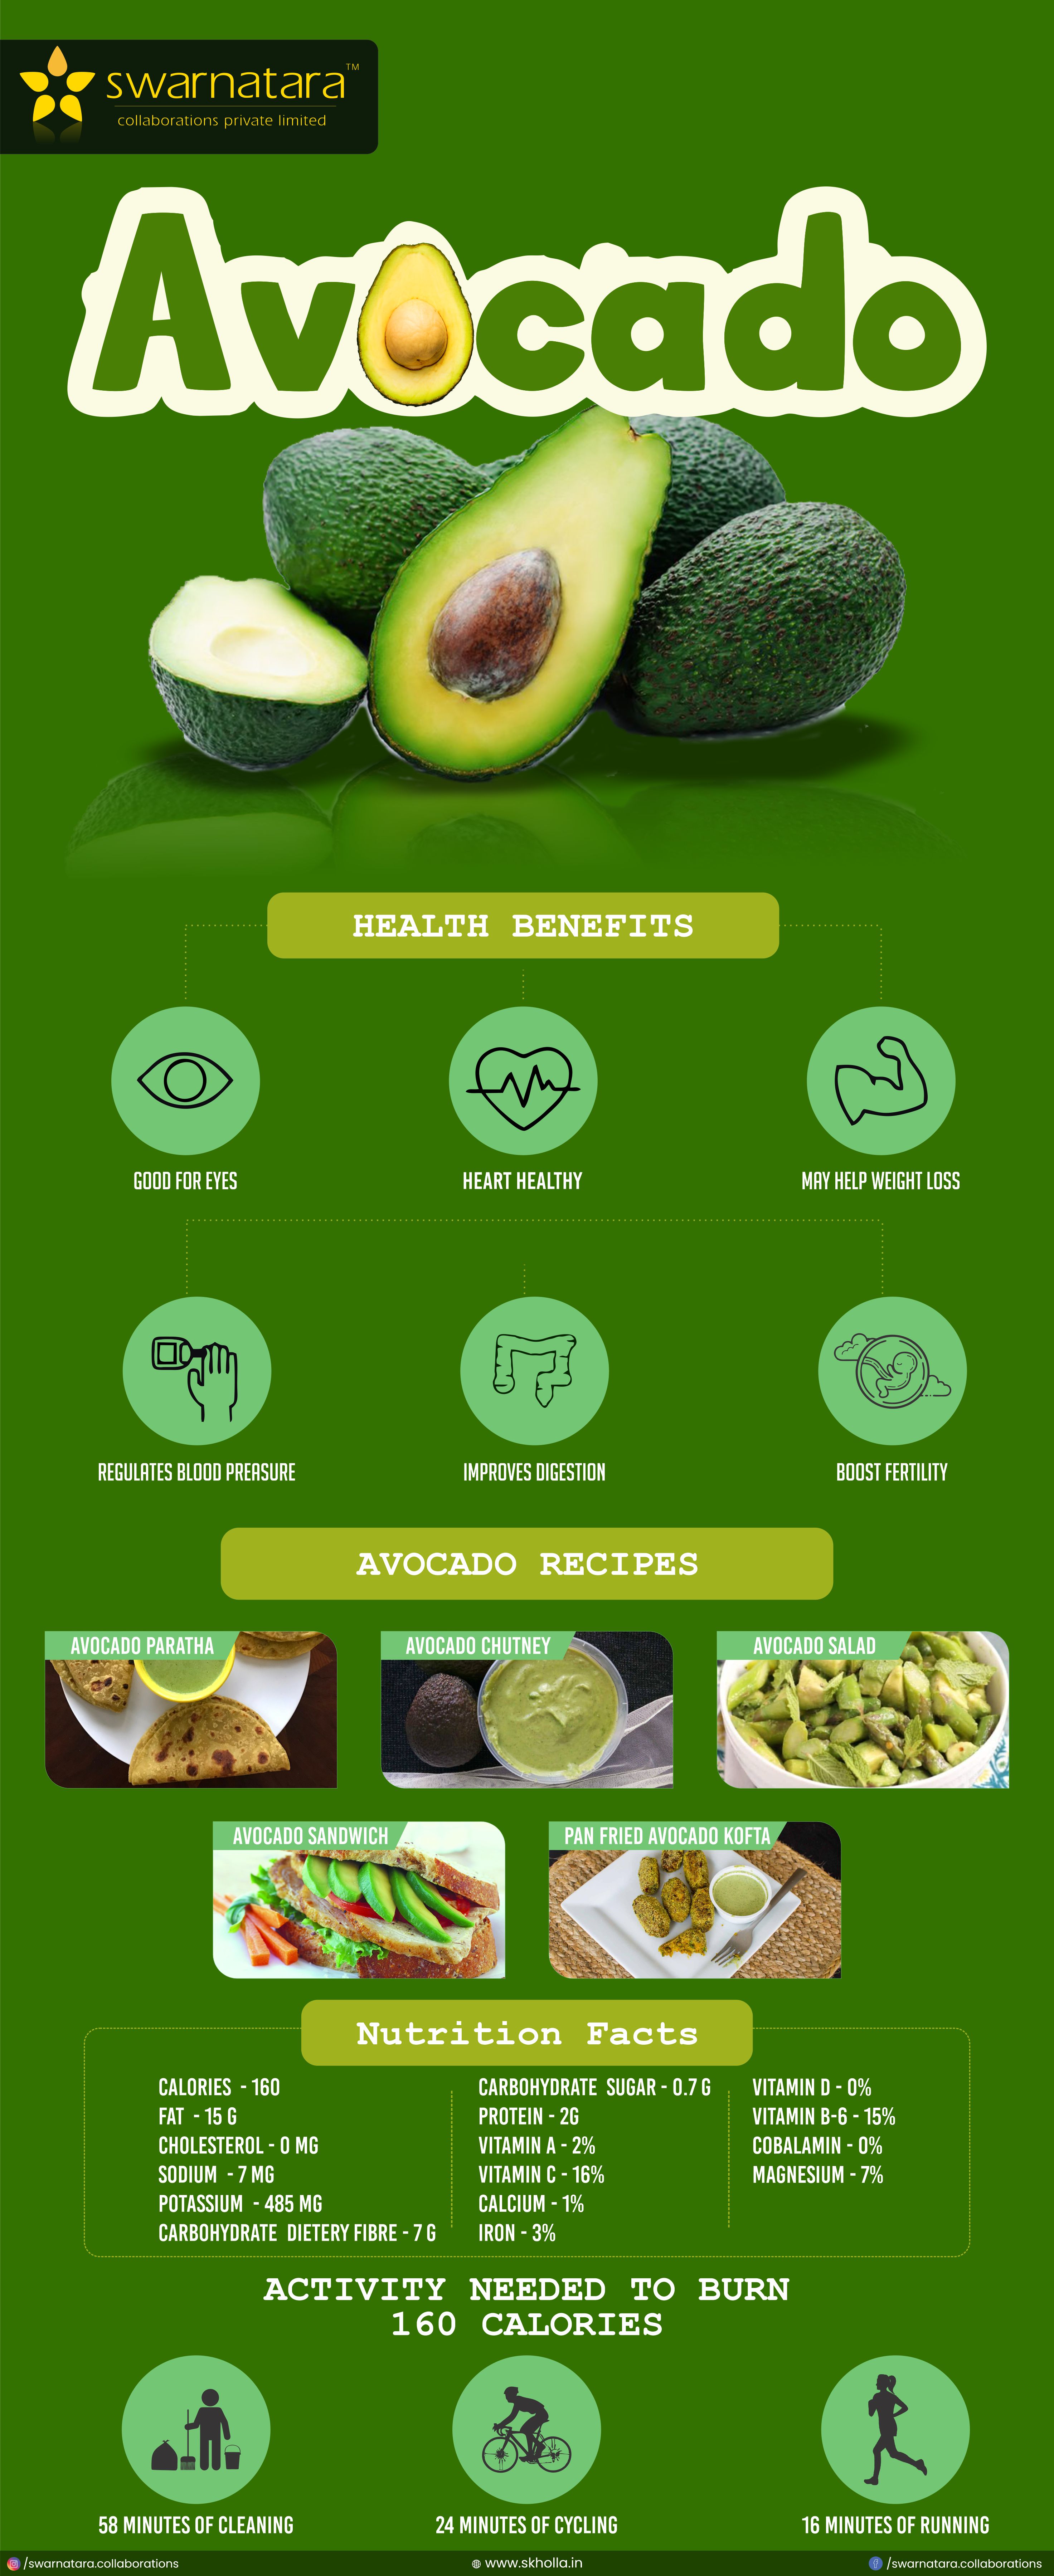 Buy Avocado Pack of 1 Kg Fruits Online Skholla.in